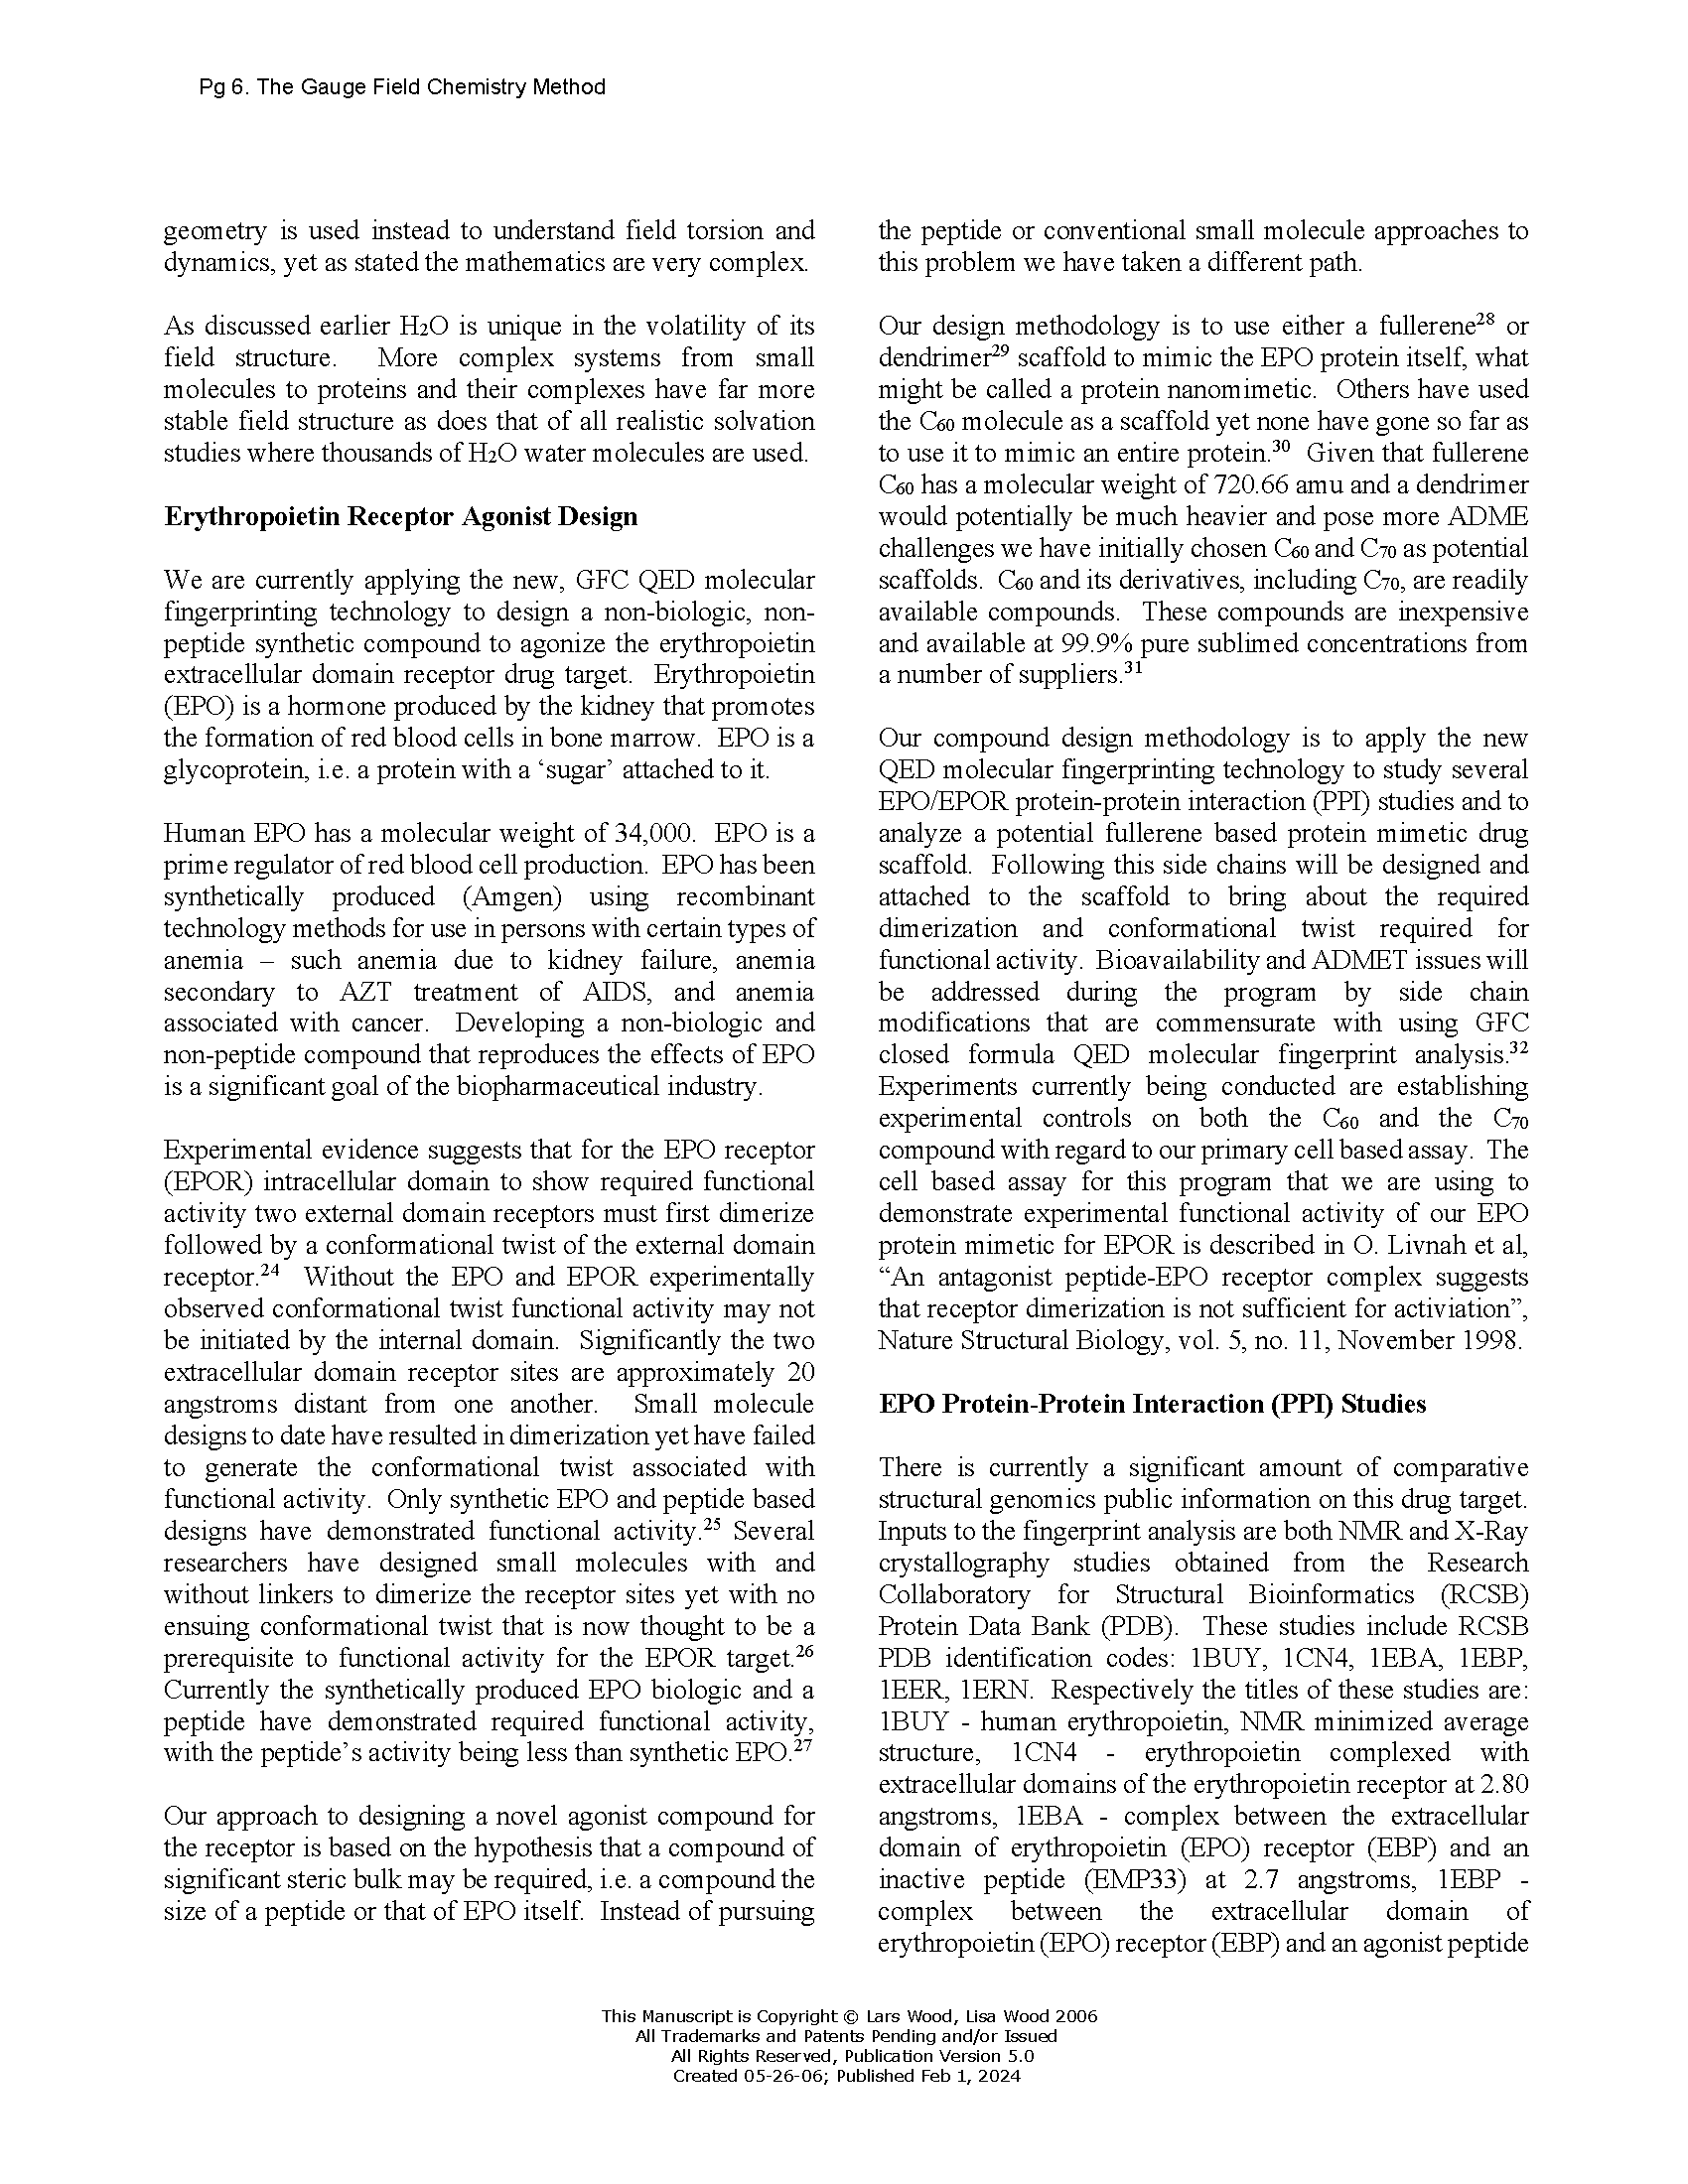 The Gauge Field Chemistry Method V5 Published_Page_06.png